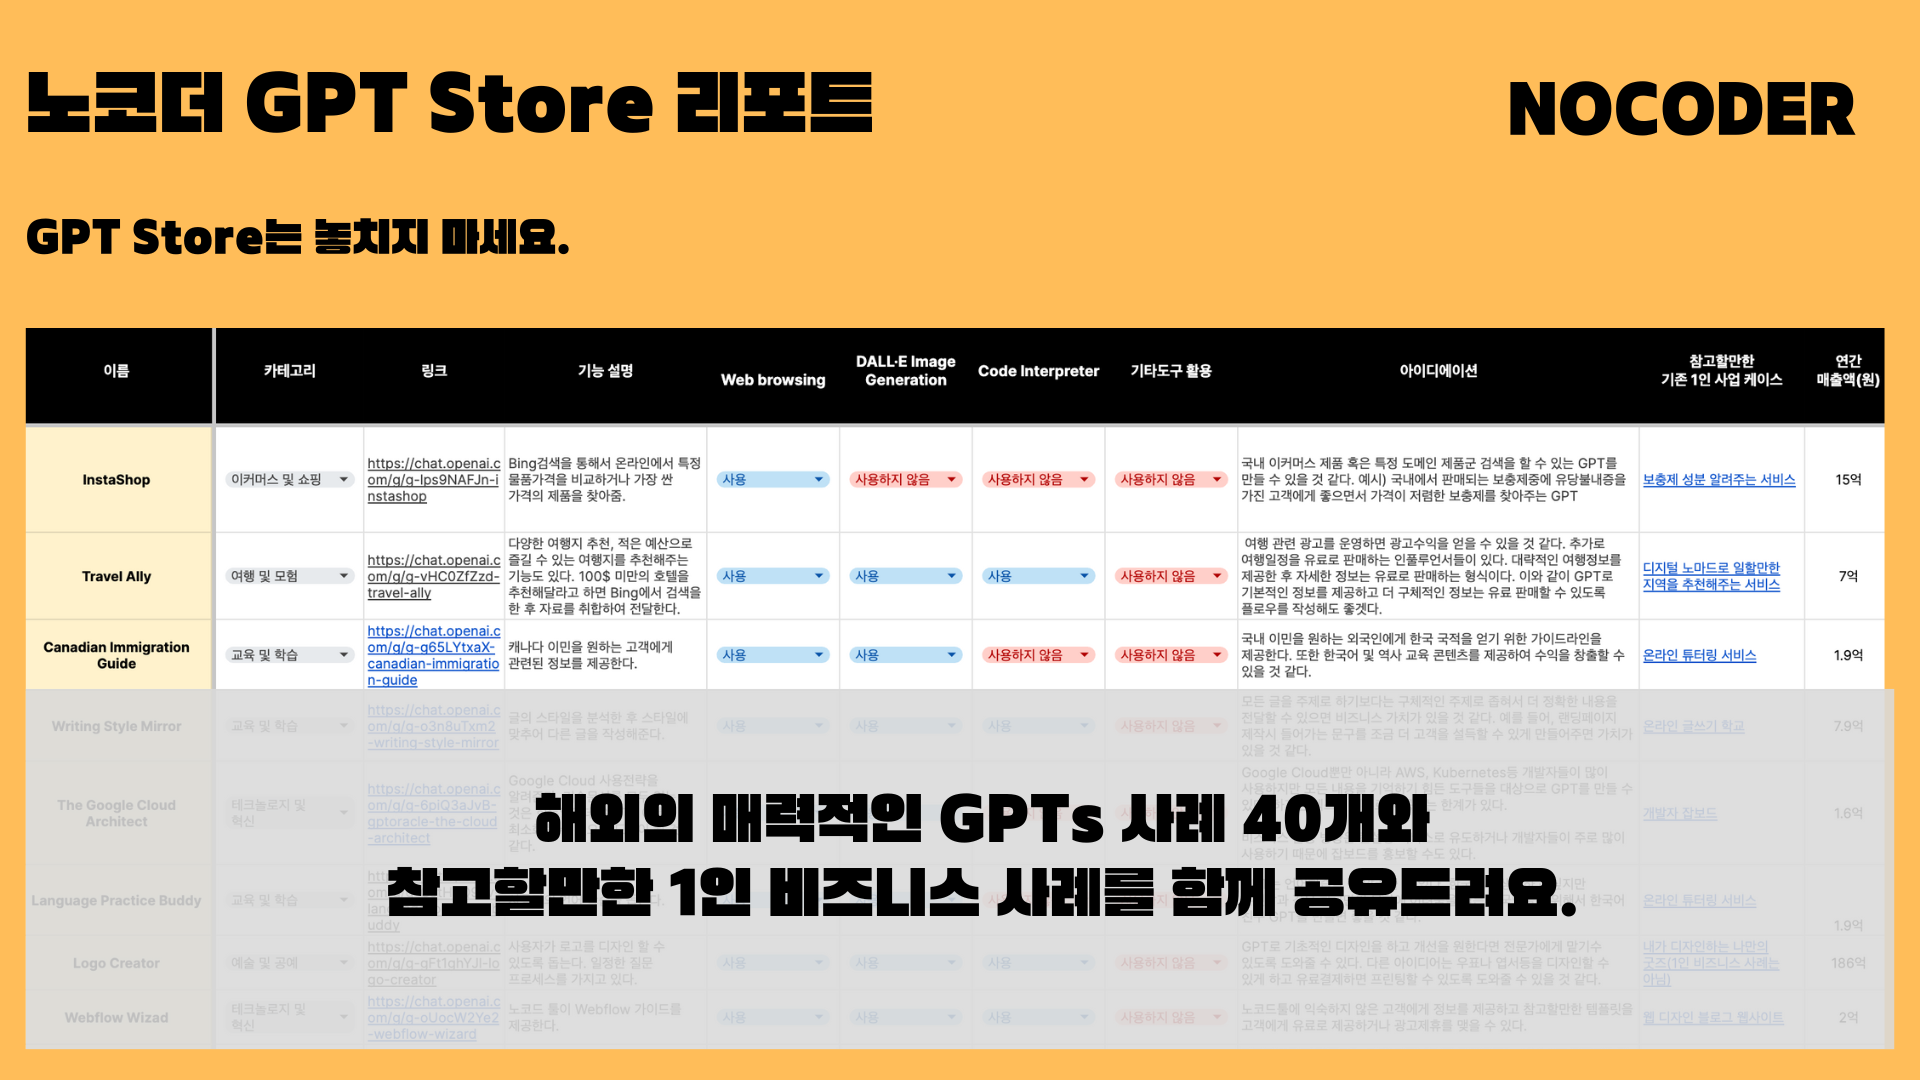 GPT Store 리포트